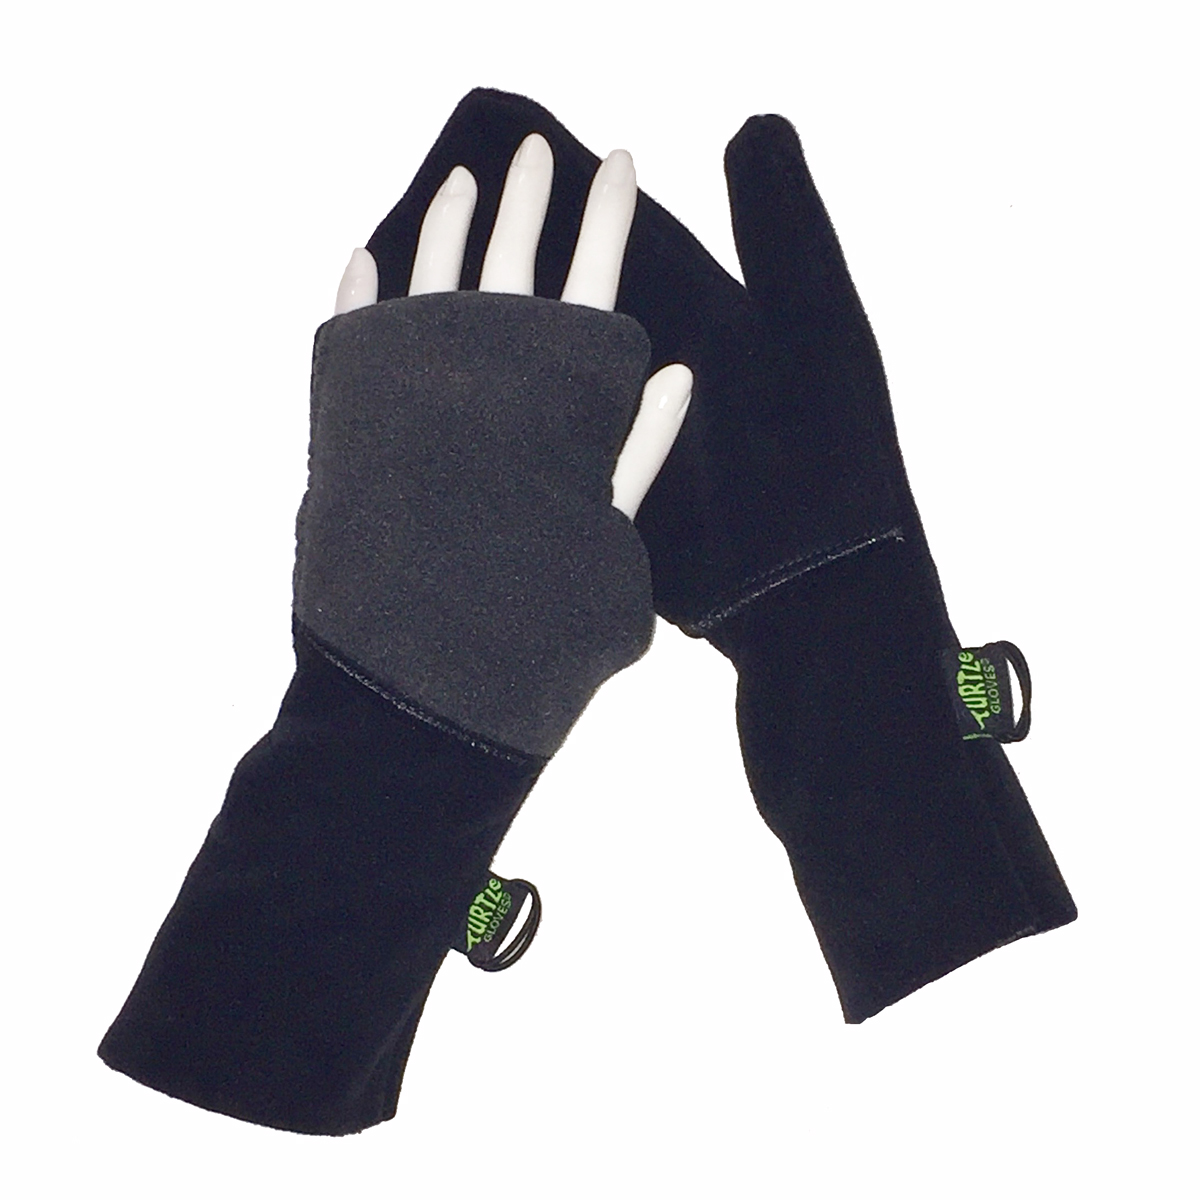 gift for her or him fingerless gloves Accessories Gloves & Mittens Winter Gloves alpaca mix convertible gloves dog walking gloves driving gloves Alpaca convertible mittens 